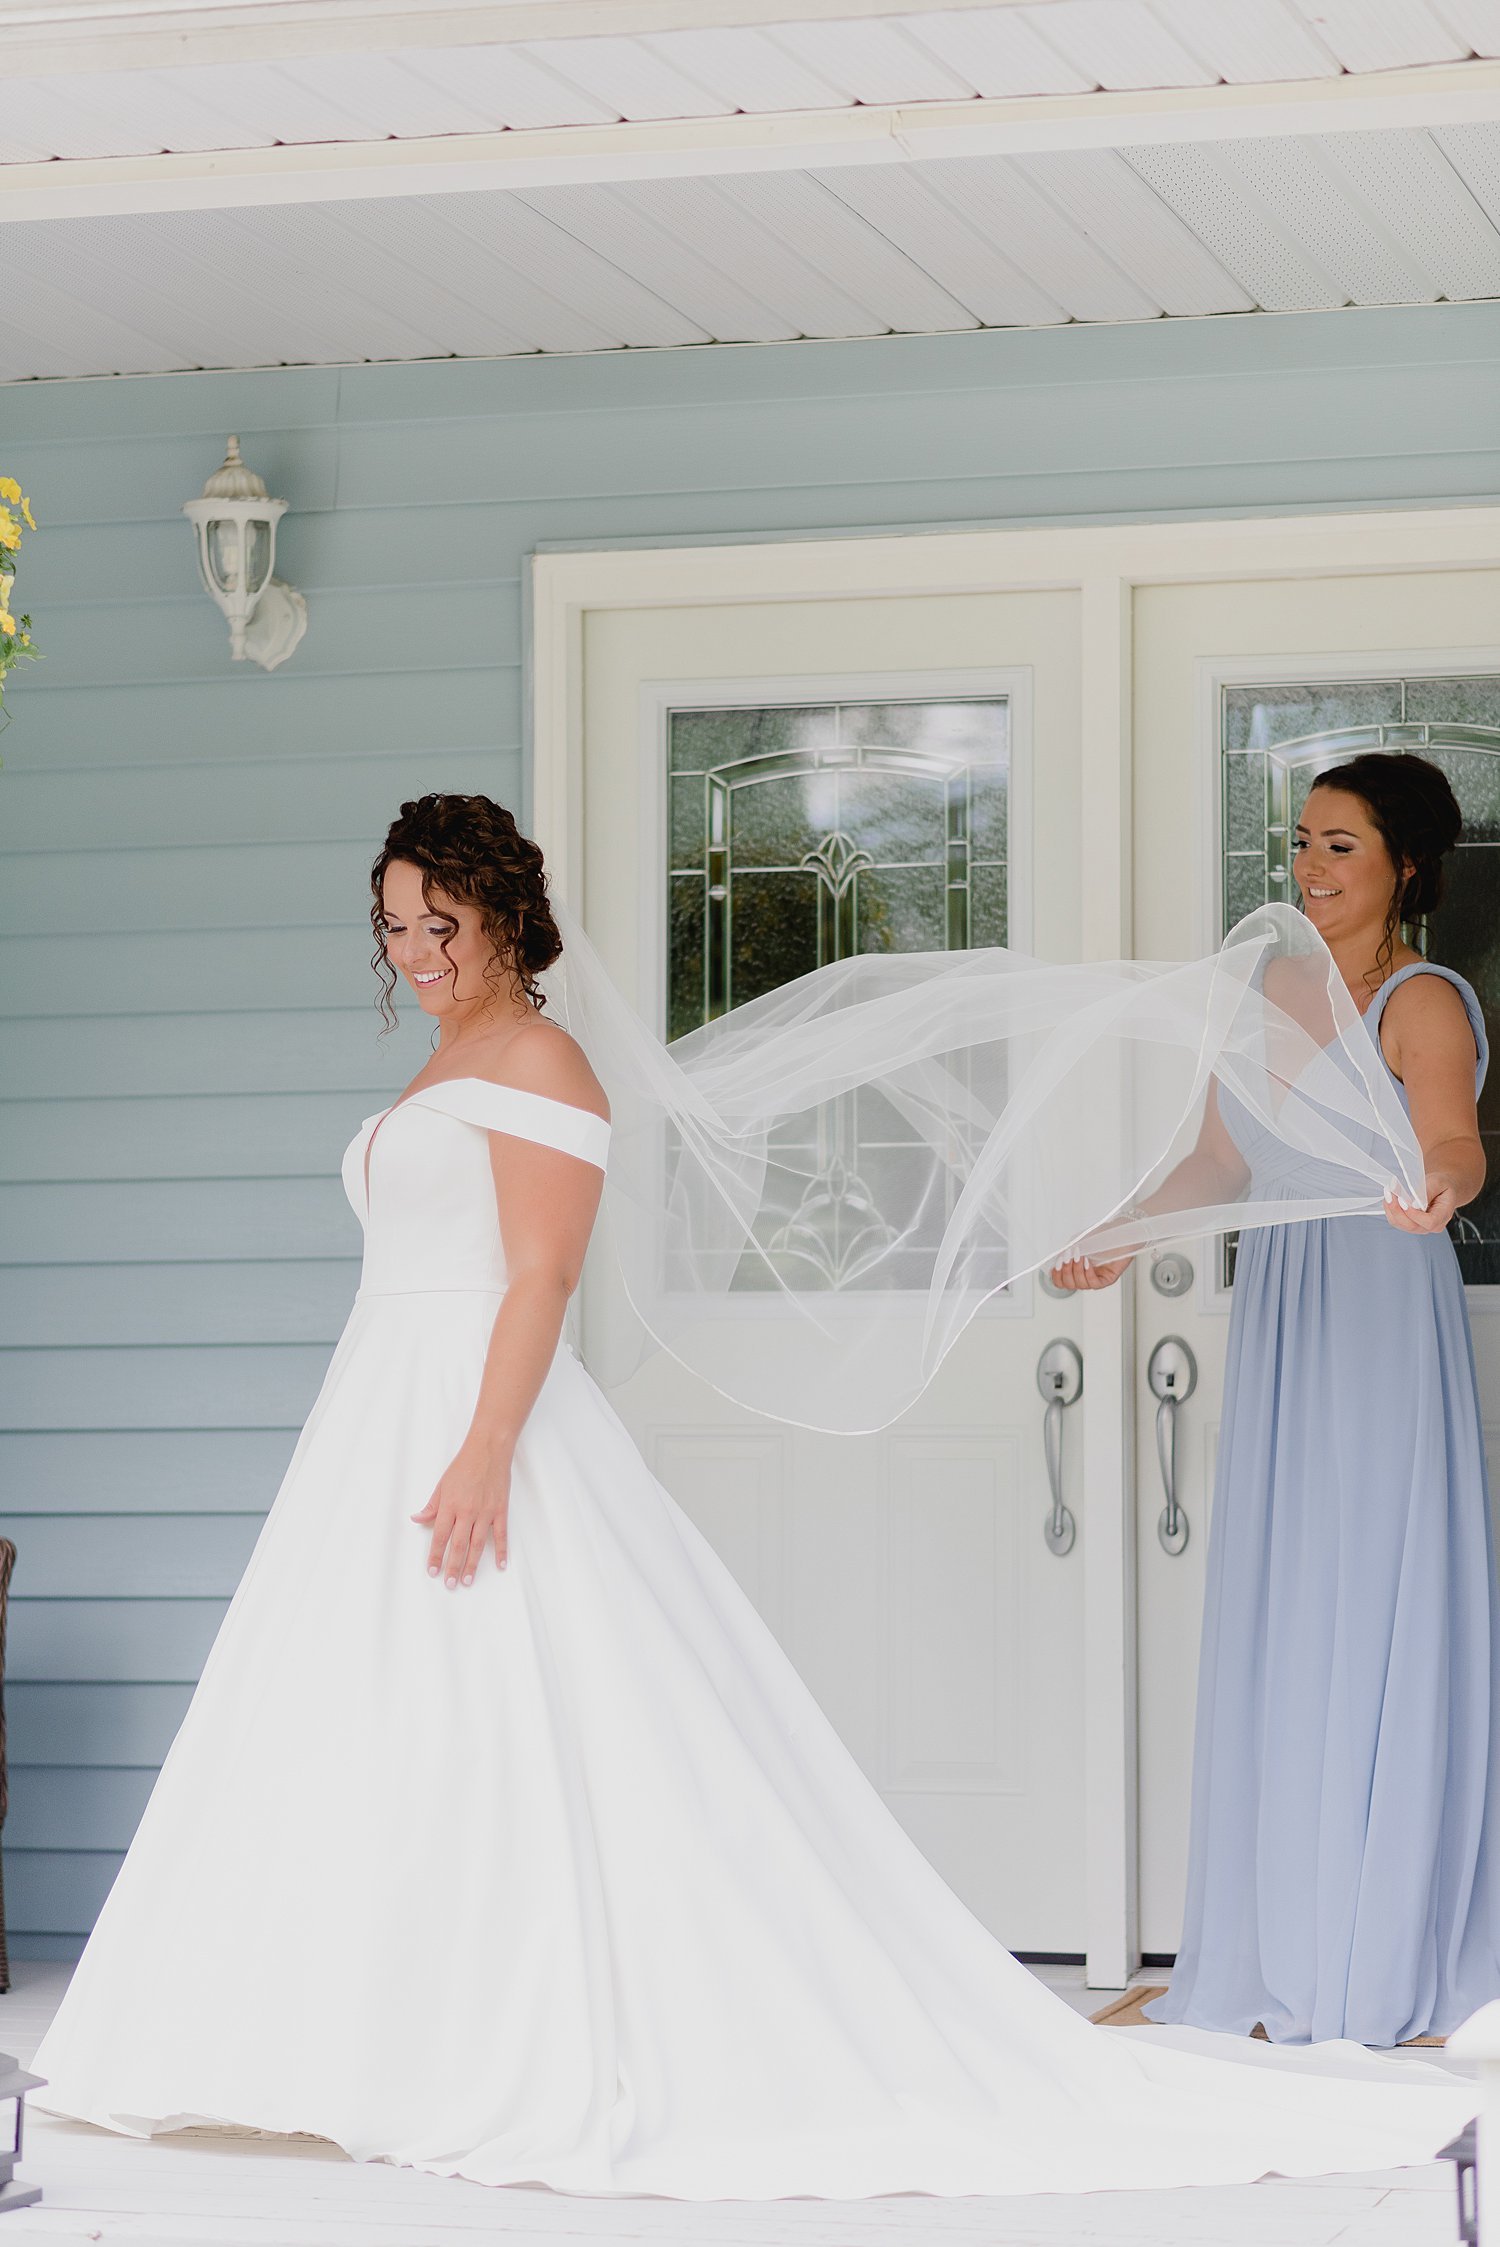 Elegant Summer Backyard Tented Wedding in Sydenham, Ontario | Prince Edward County Wedding Photographer | Holly McMurter Photographs_0004.jpg